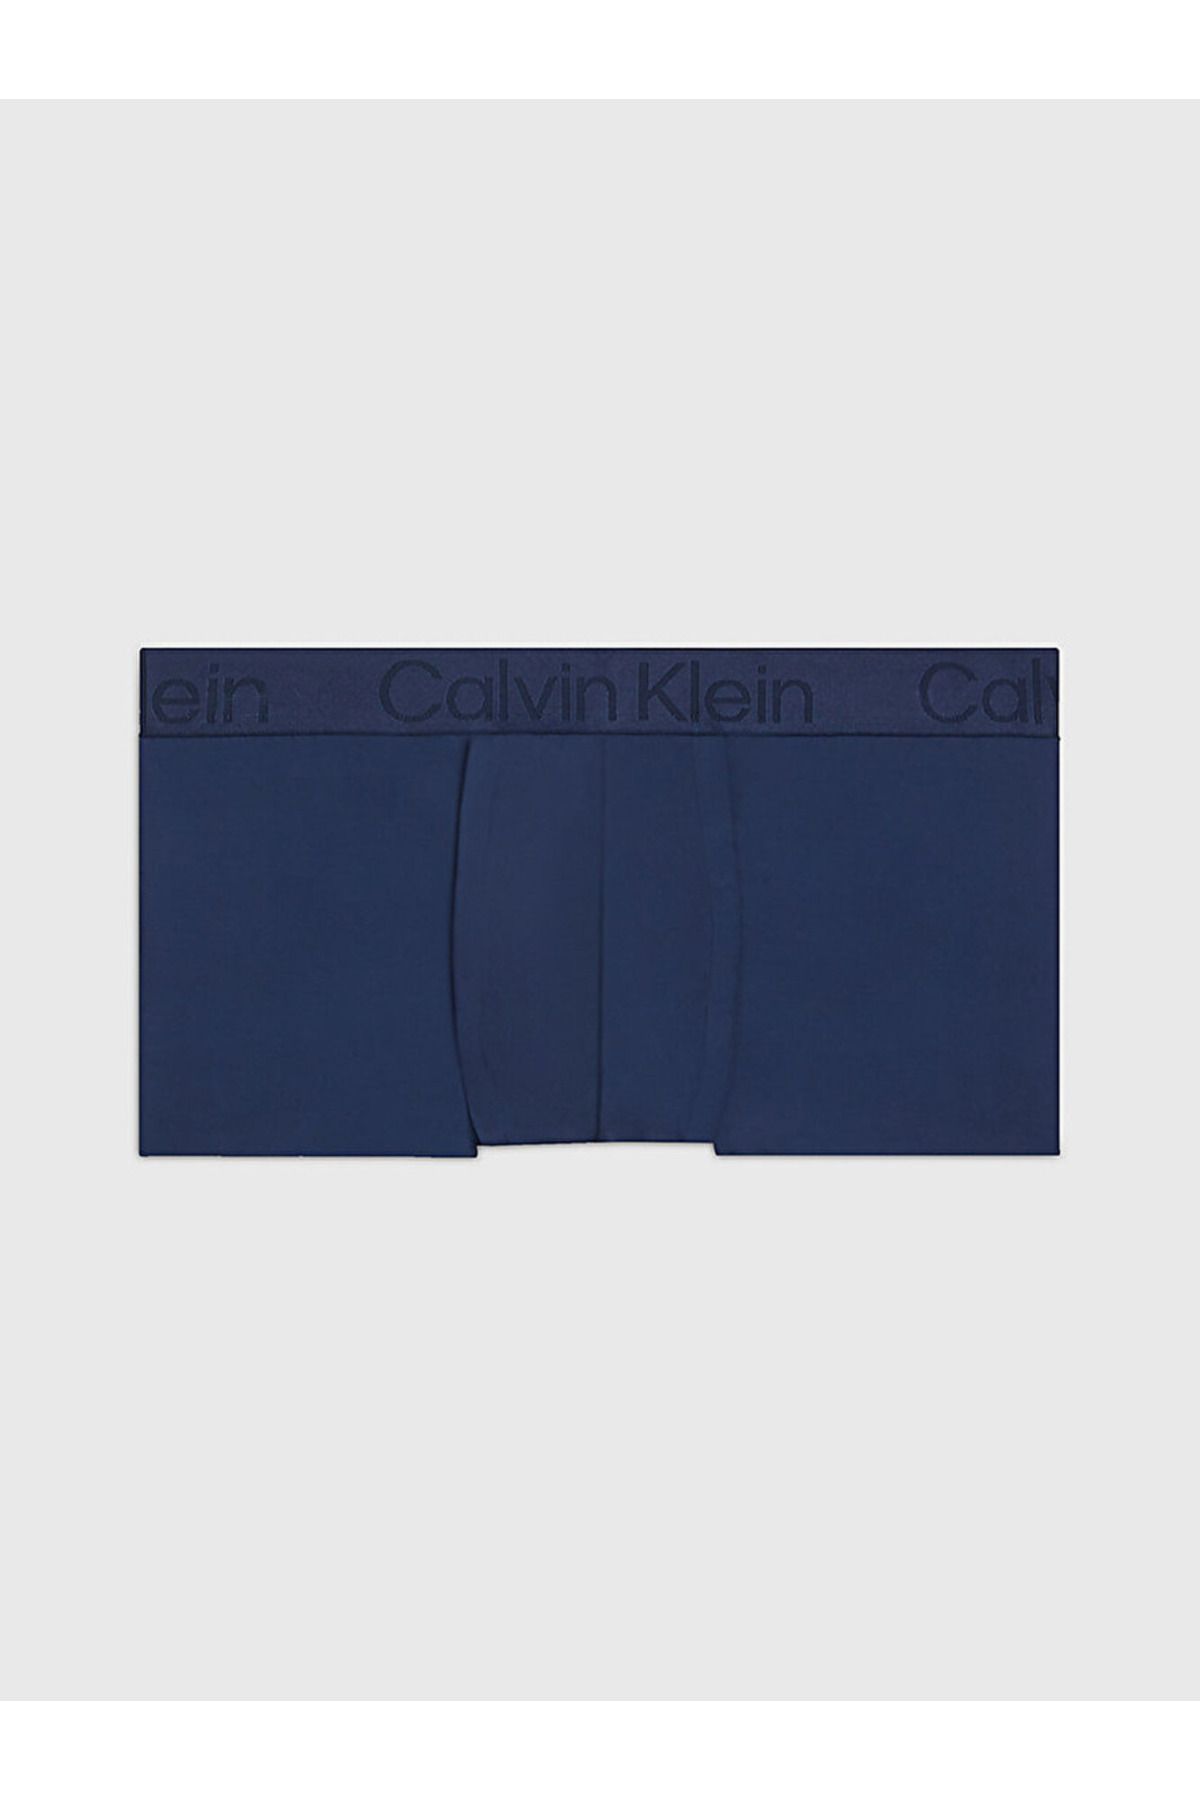 Calvin Klein Low Rise Trunks - CK Black Cooling